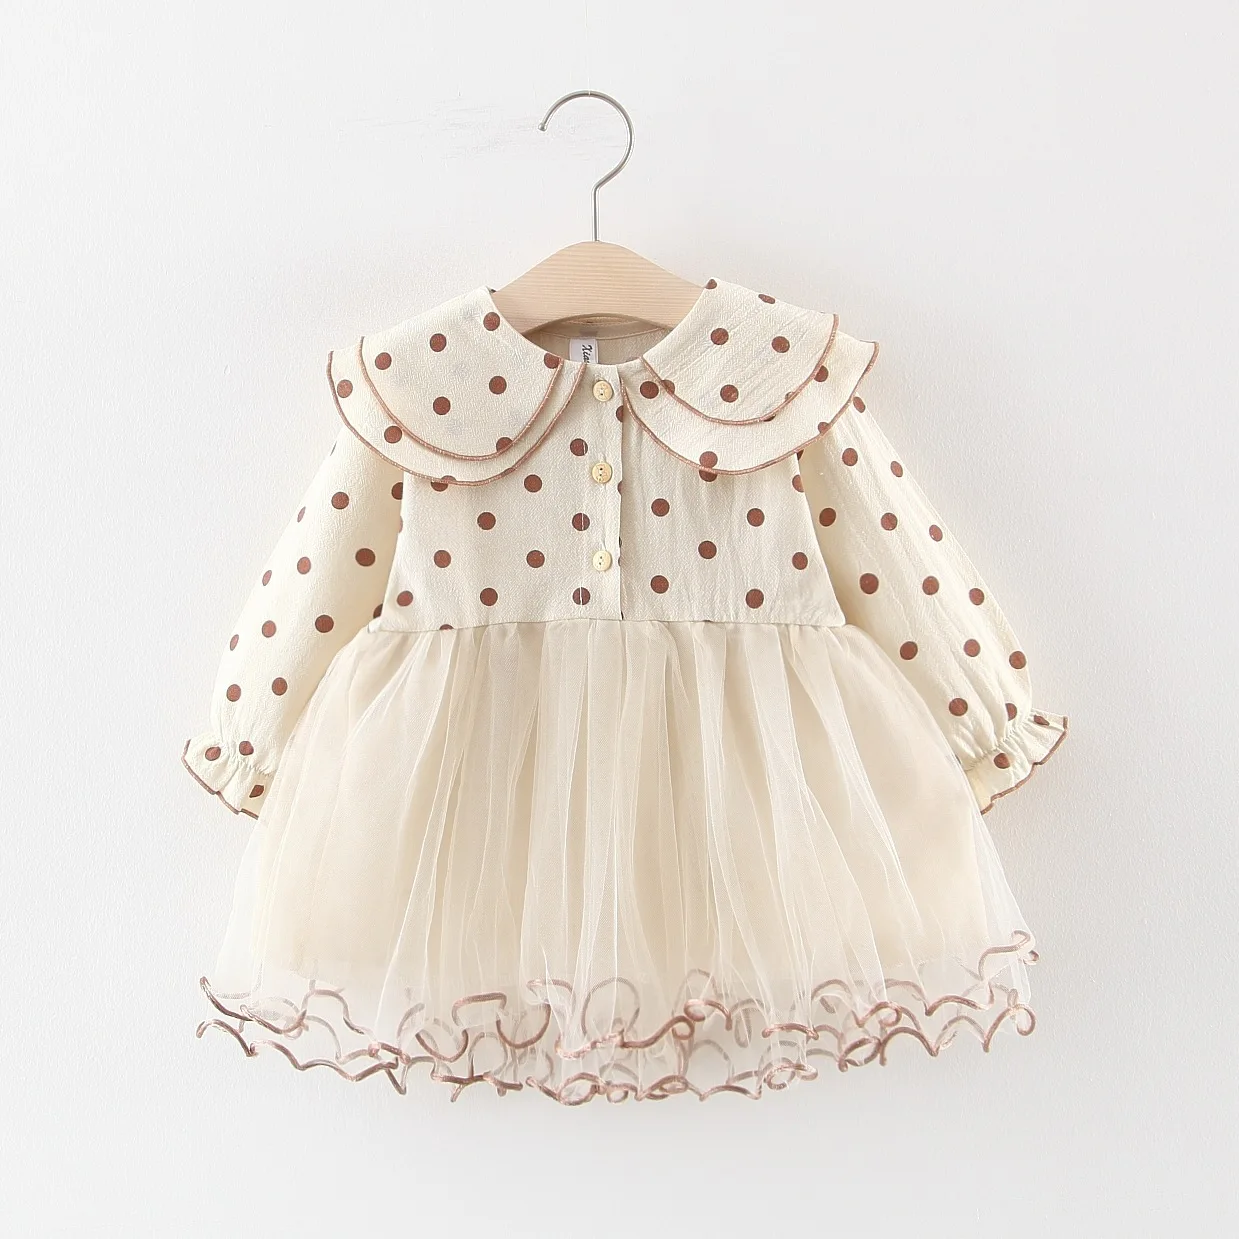 Toddler Polka Dot Ball Gown Princess Dress For Baby Girl Clothes Brand Autumn Newborn Long Sleeve Lapel Birthday Dress 1-3 Years